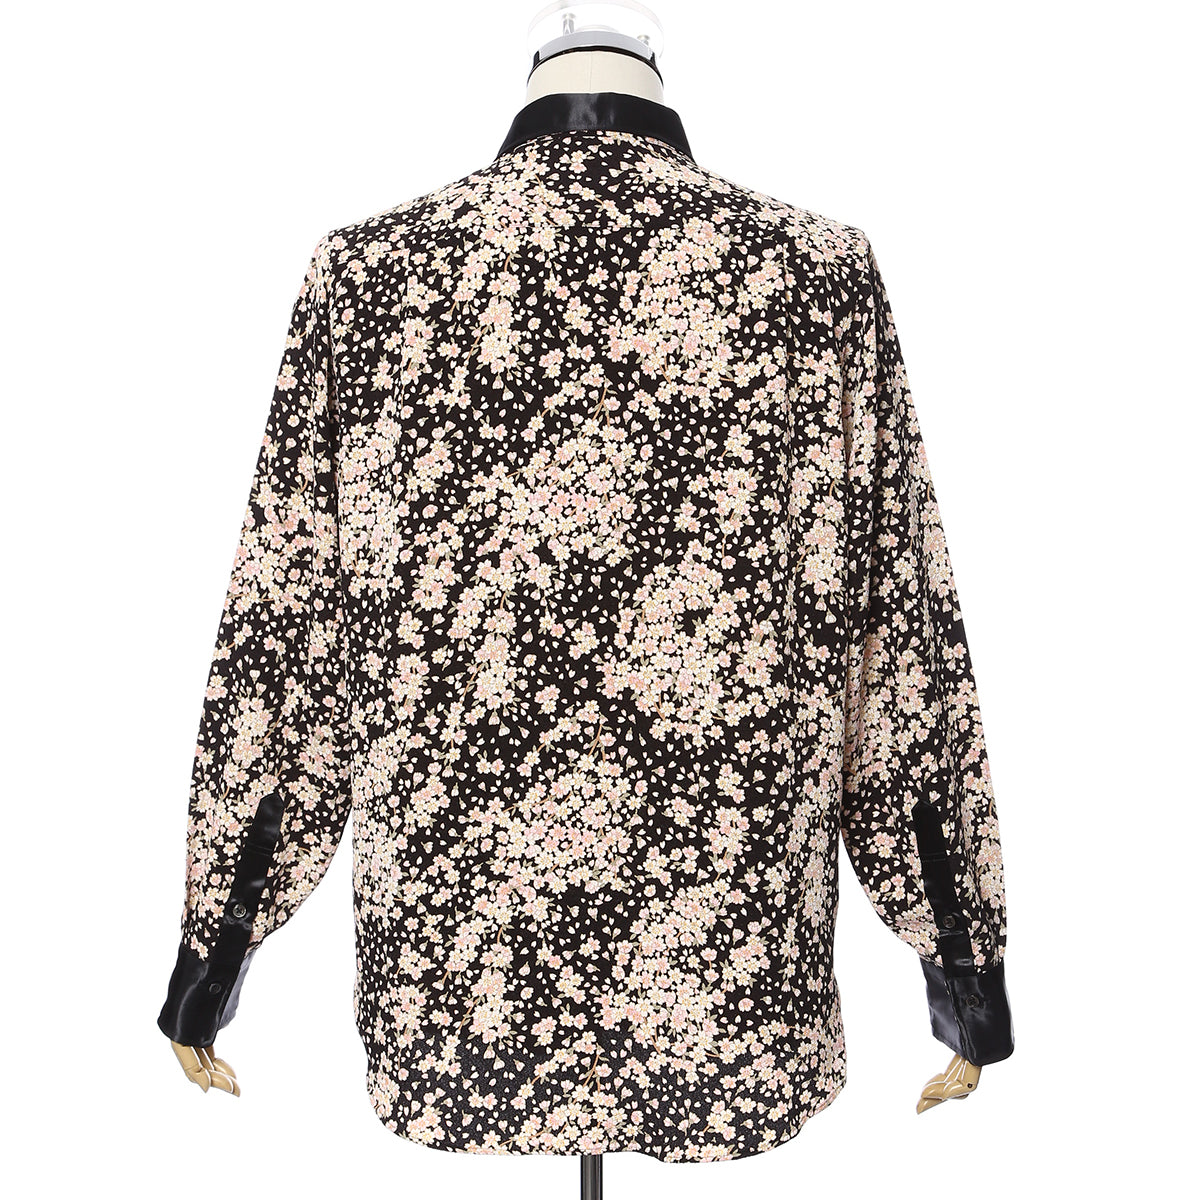 Men’s Unisex Sakura Crepe Dress Shirt Long Sleeve -16. Samurai Cherry Blossoms Pattern Made in Japan FORTUNA Tokyo